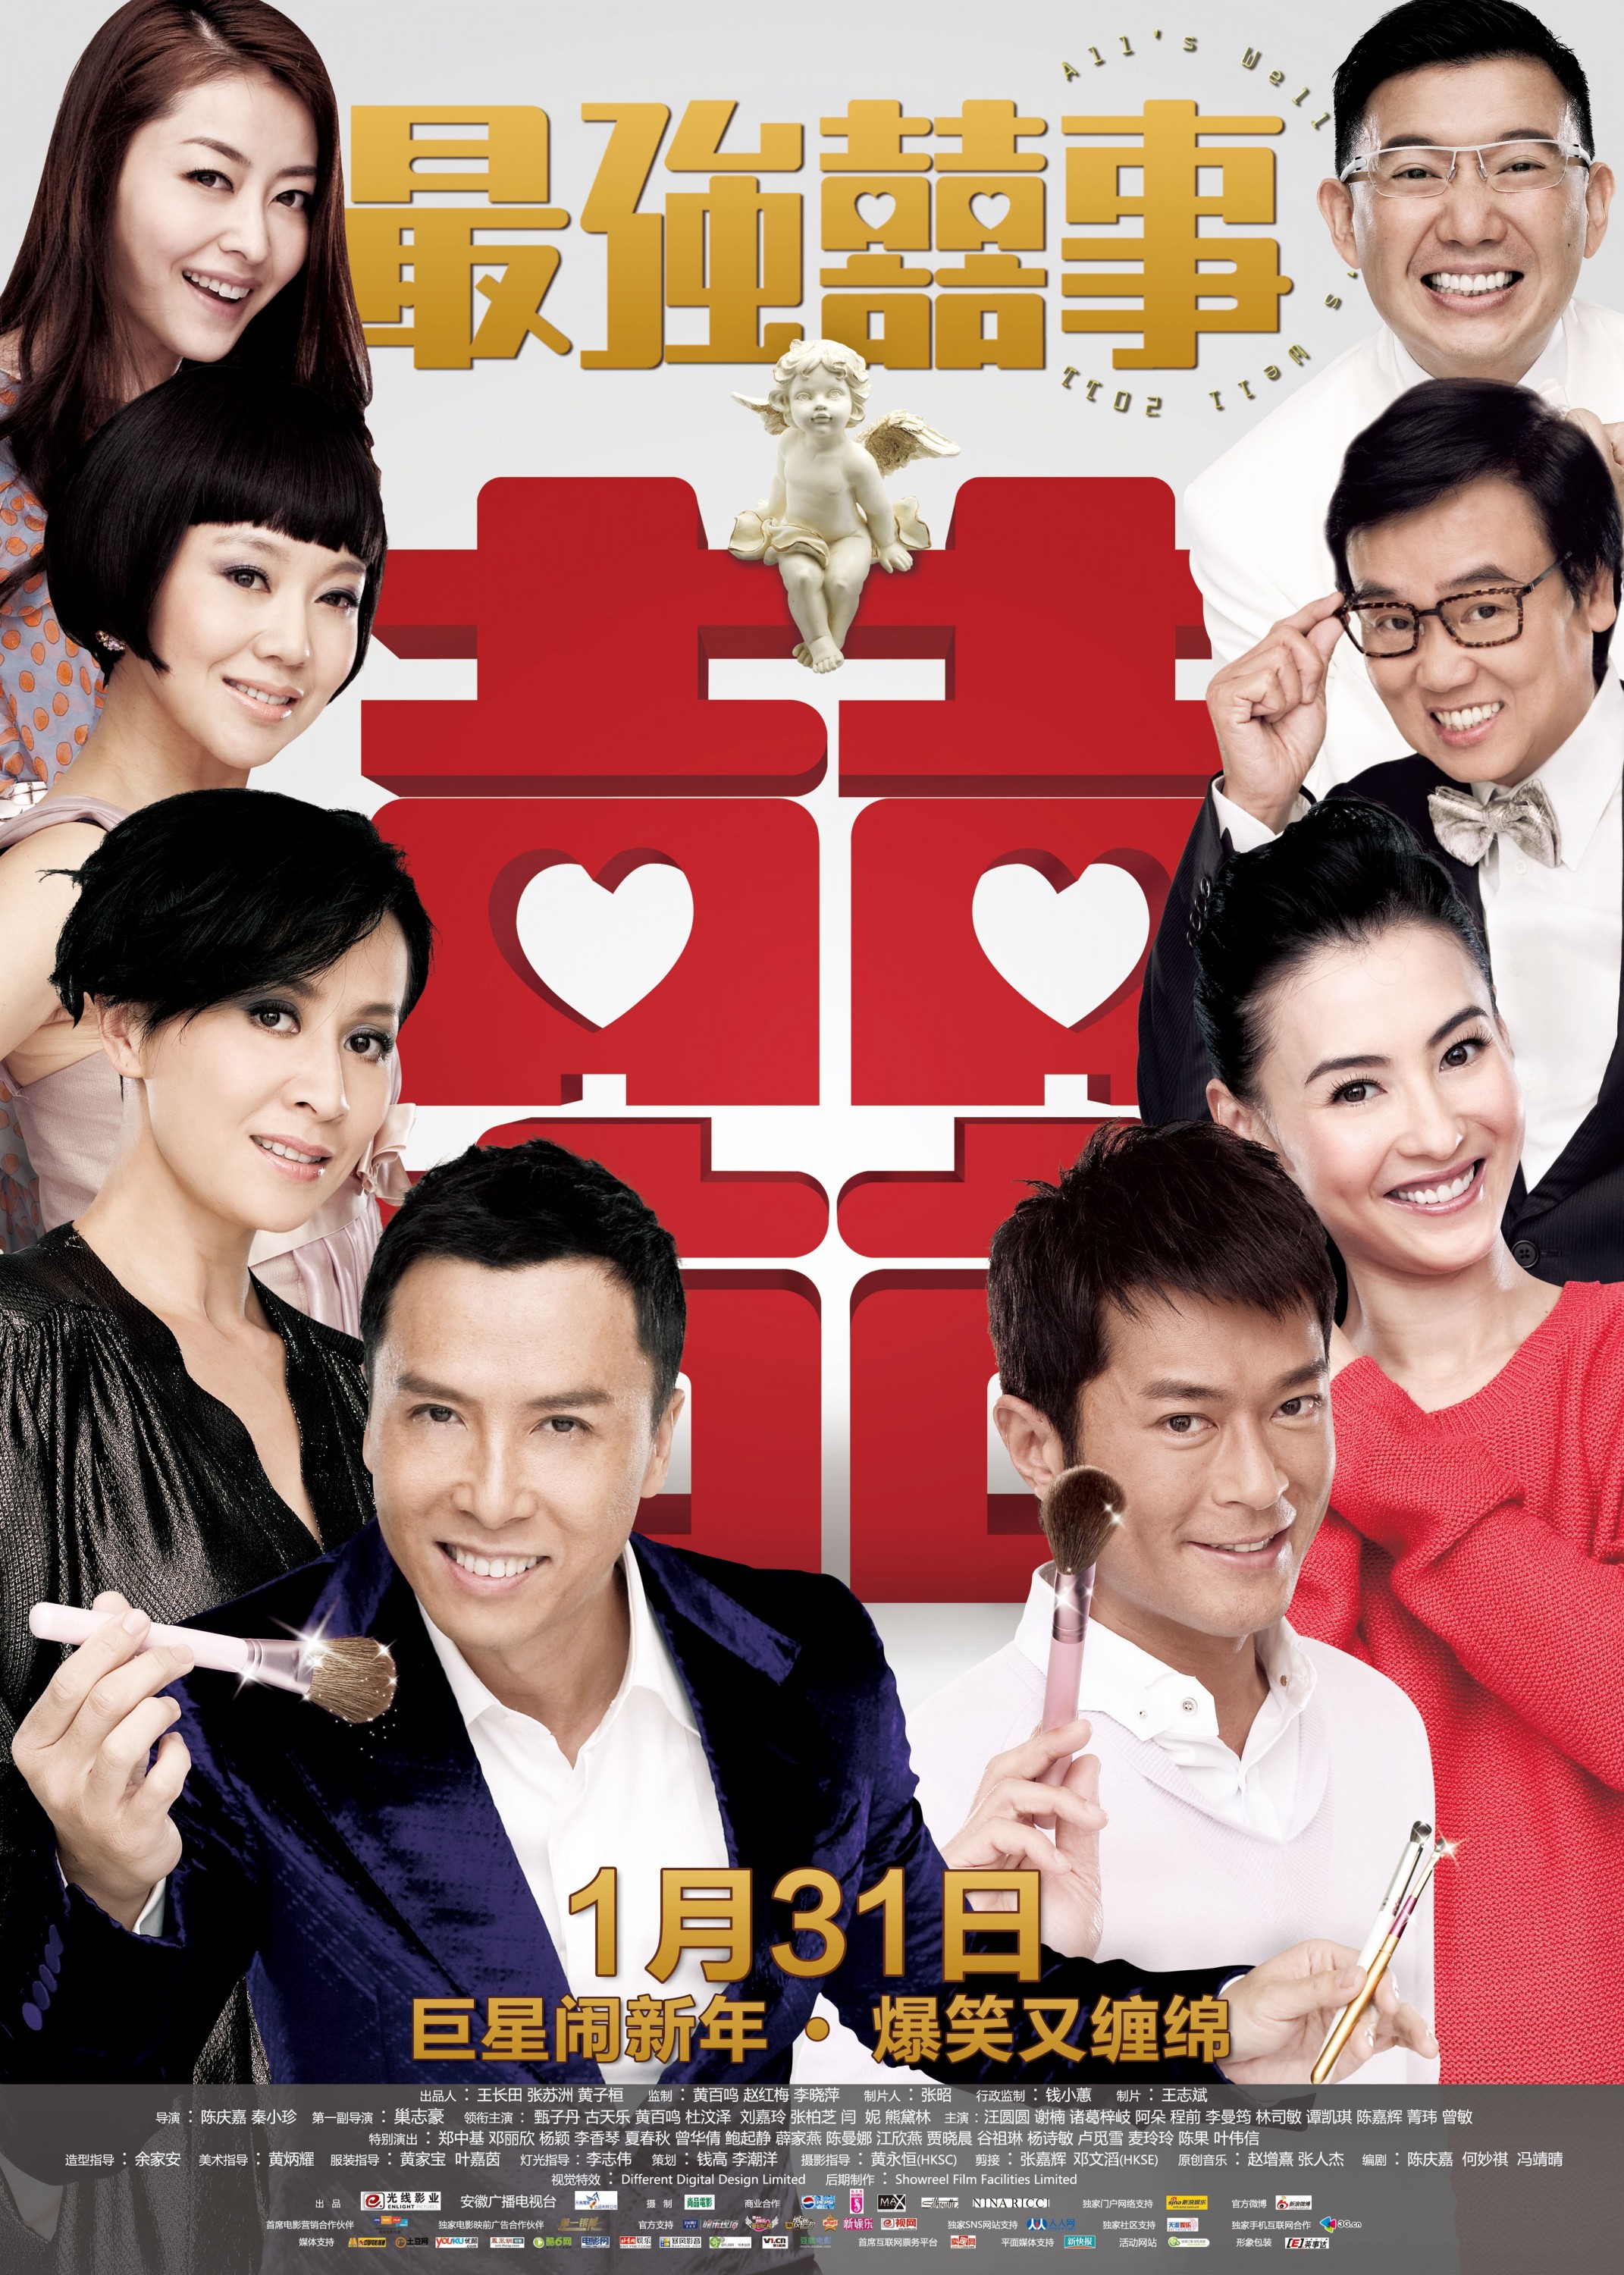 Mega Sized Movie Poster Image for Ji keung hei si 2011 